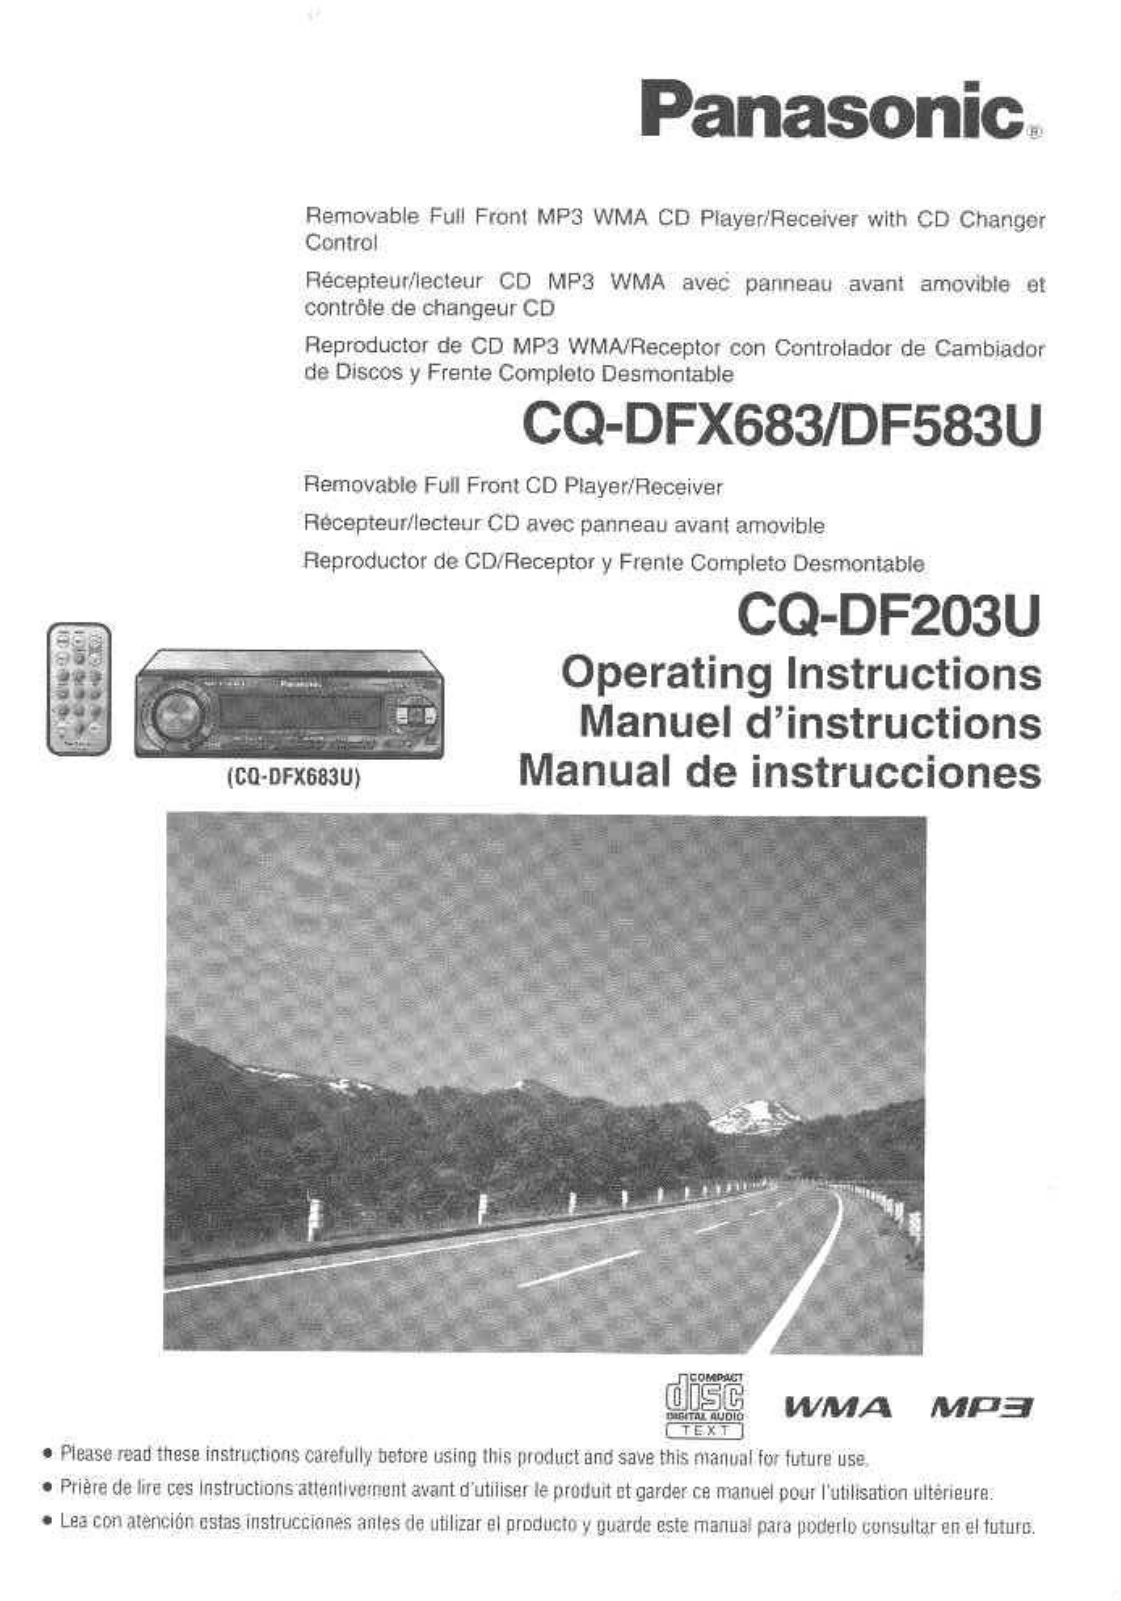 Panasonic CQ-DFX683, CQ-DF583, CQ-DF203U User Manual